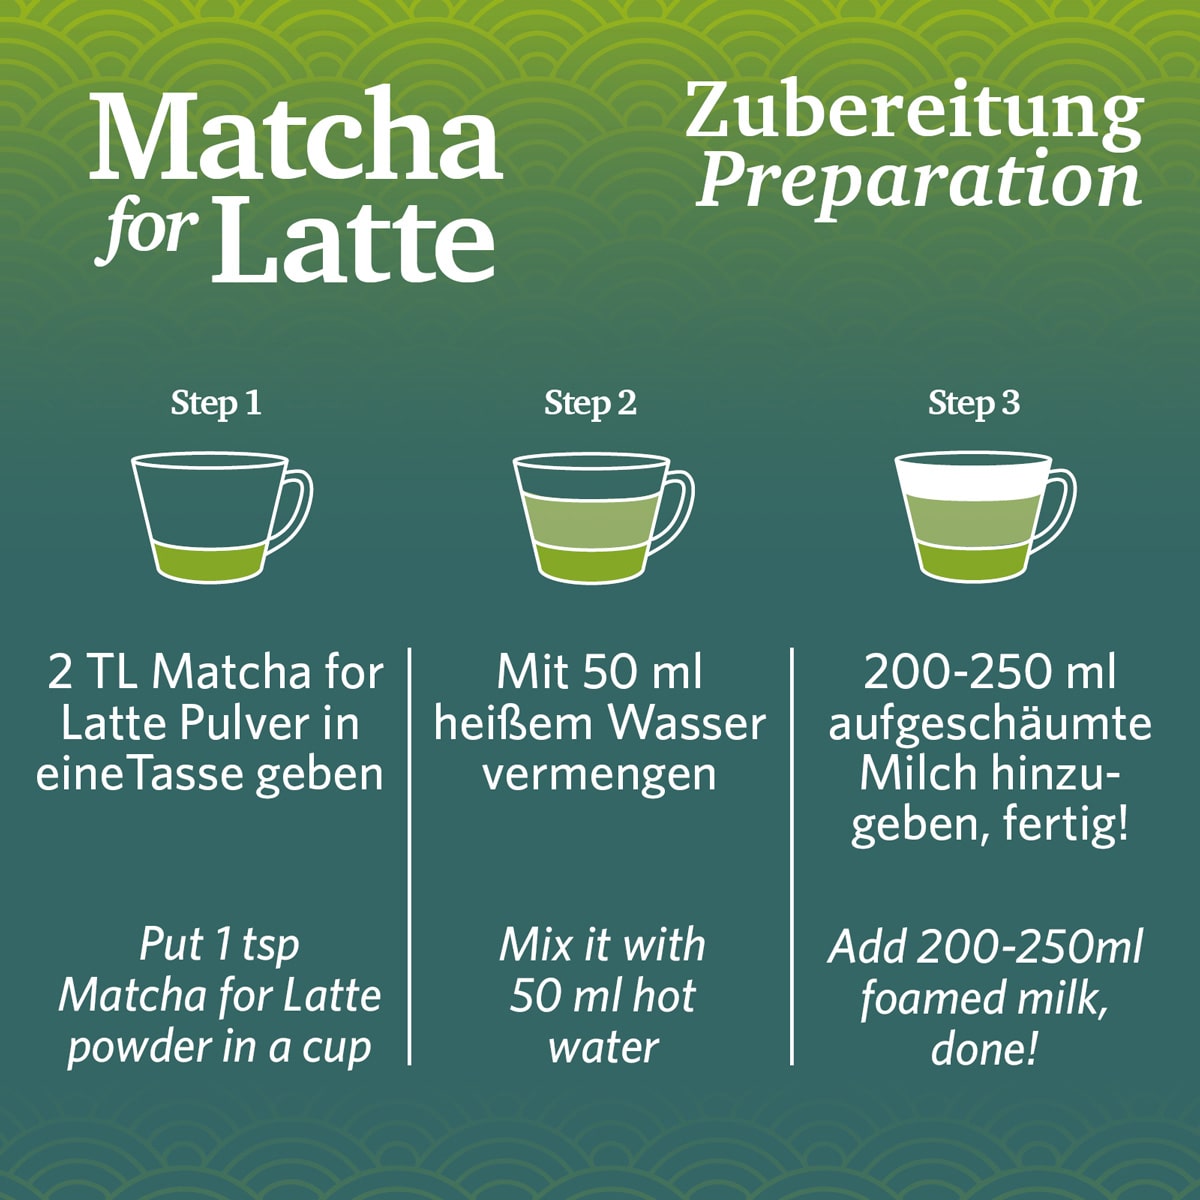 Matcha for Latte